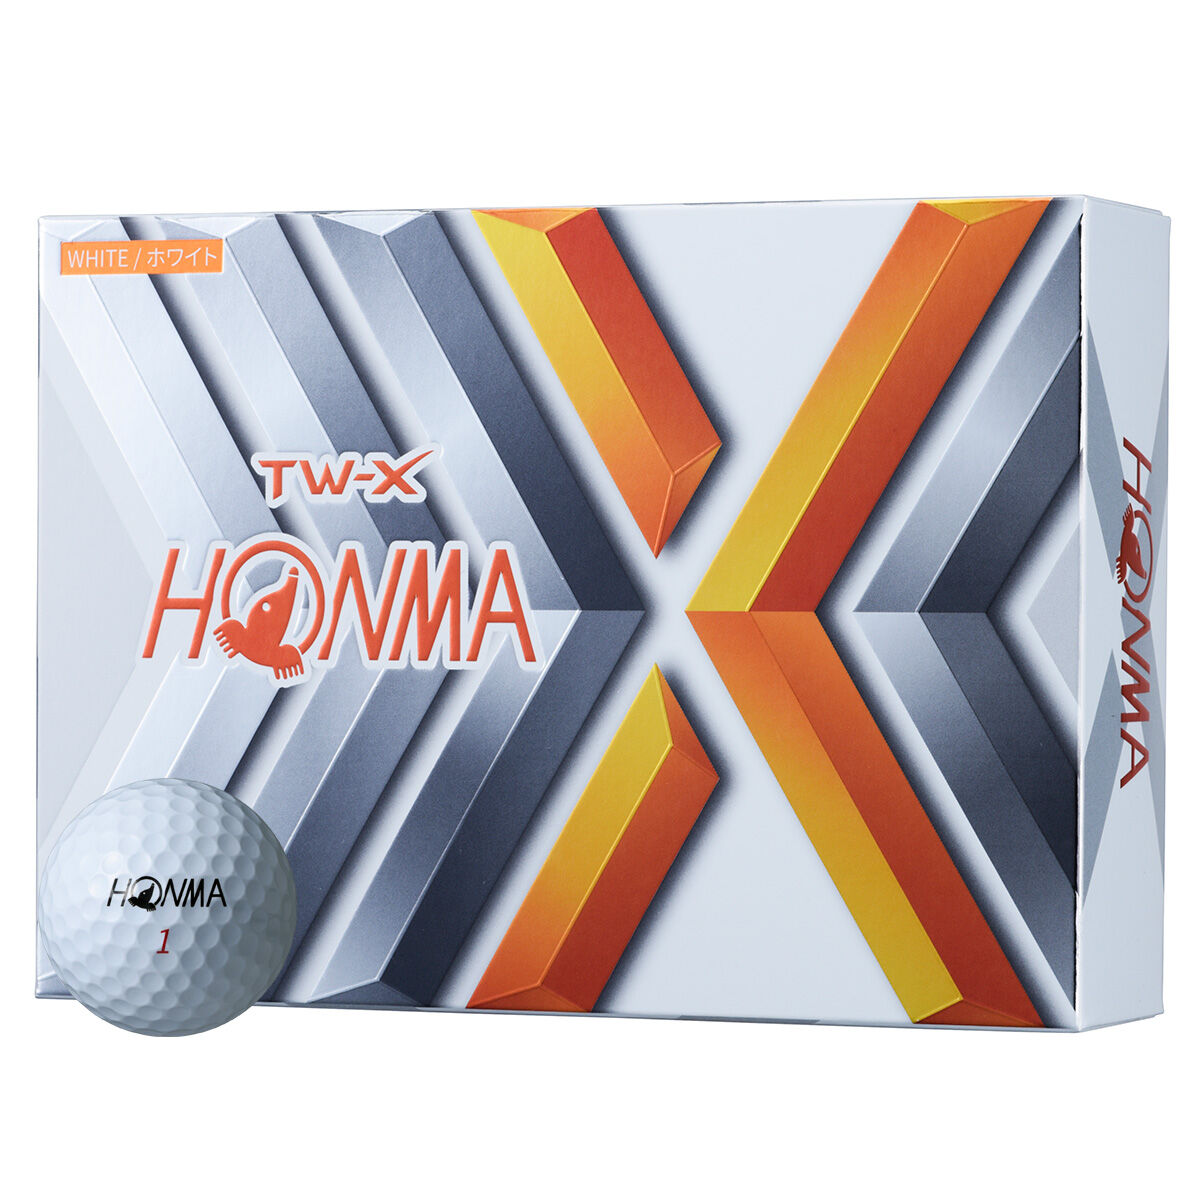 12 Balles de golf Honma TW-X Urethane, homme, Blanc | Online Golf